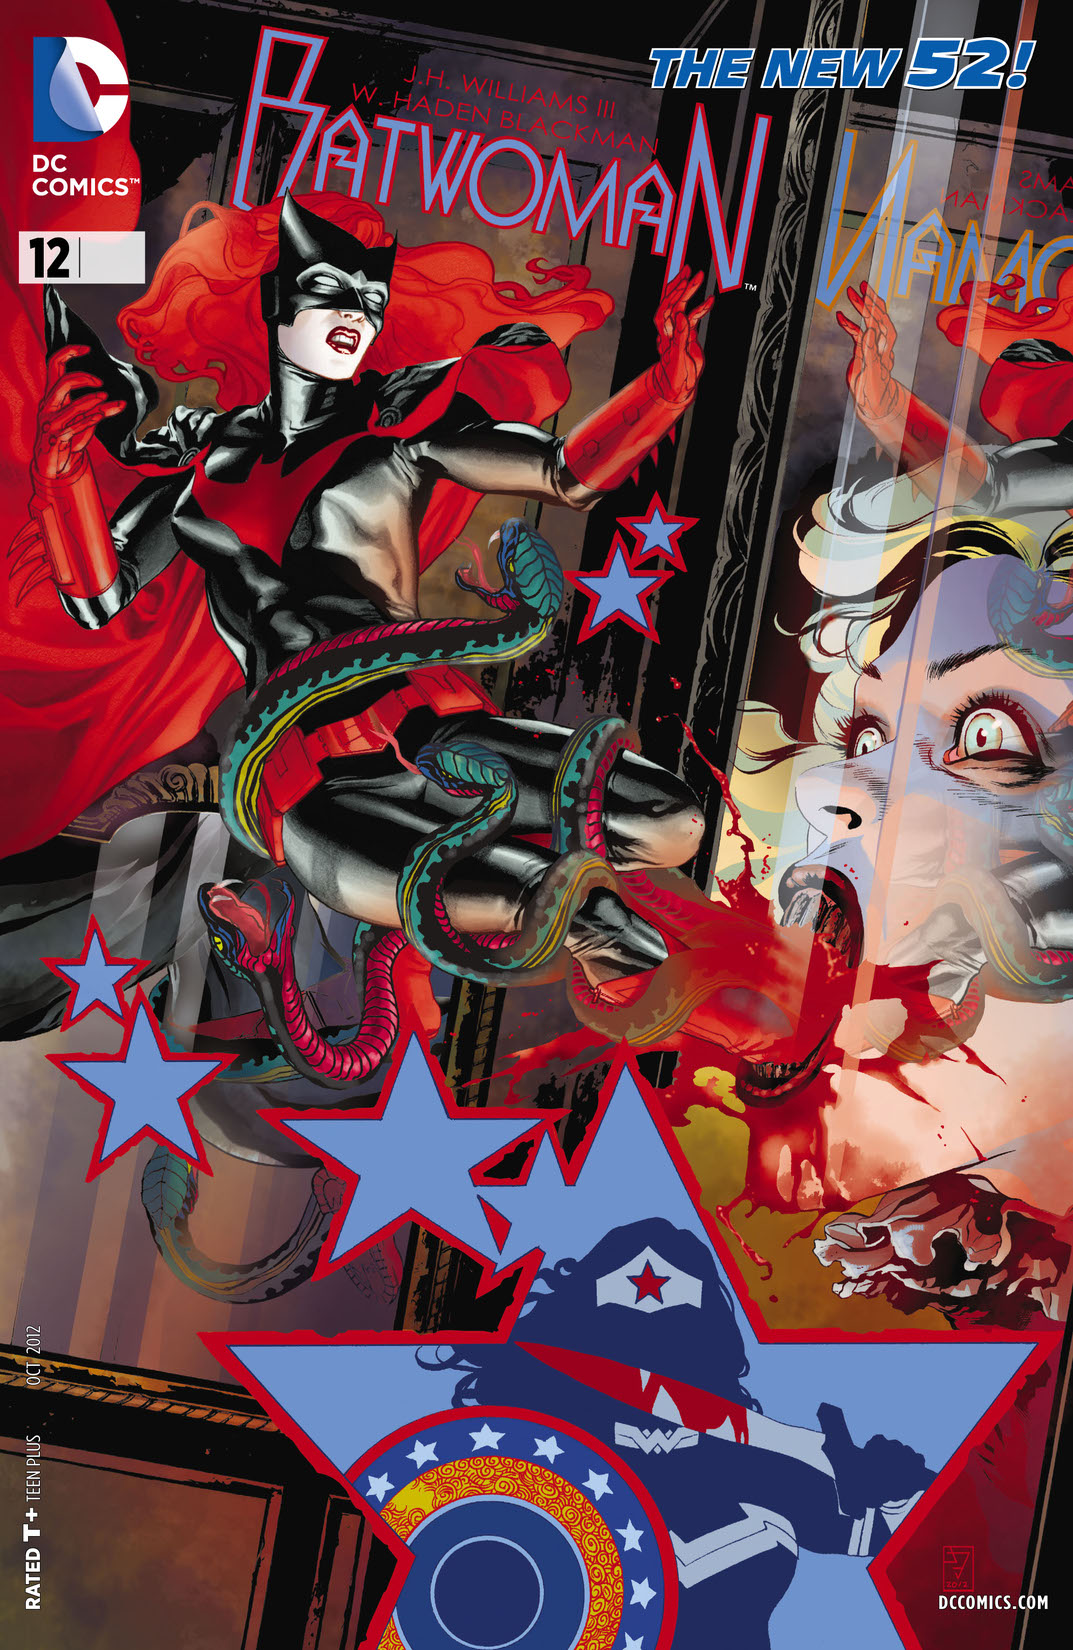 Batwoman (2011-) #12 preview images